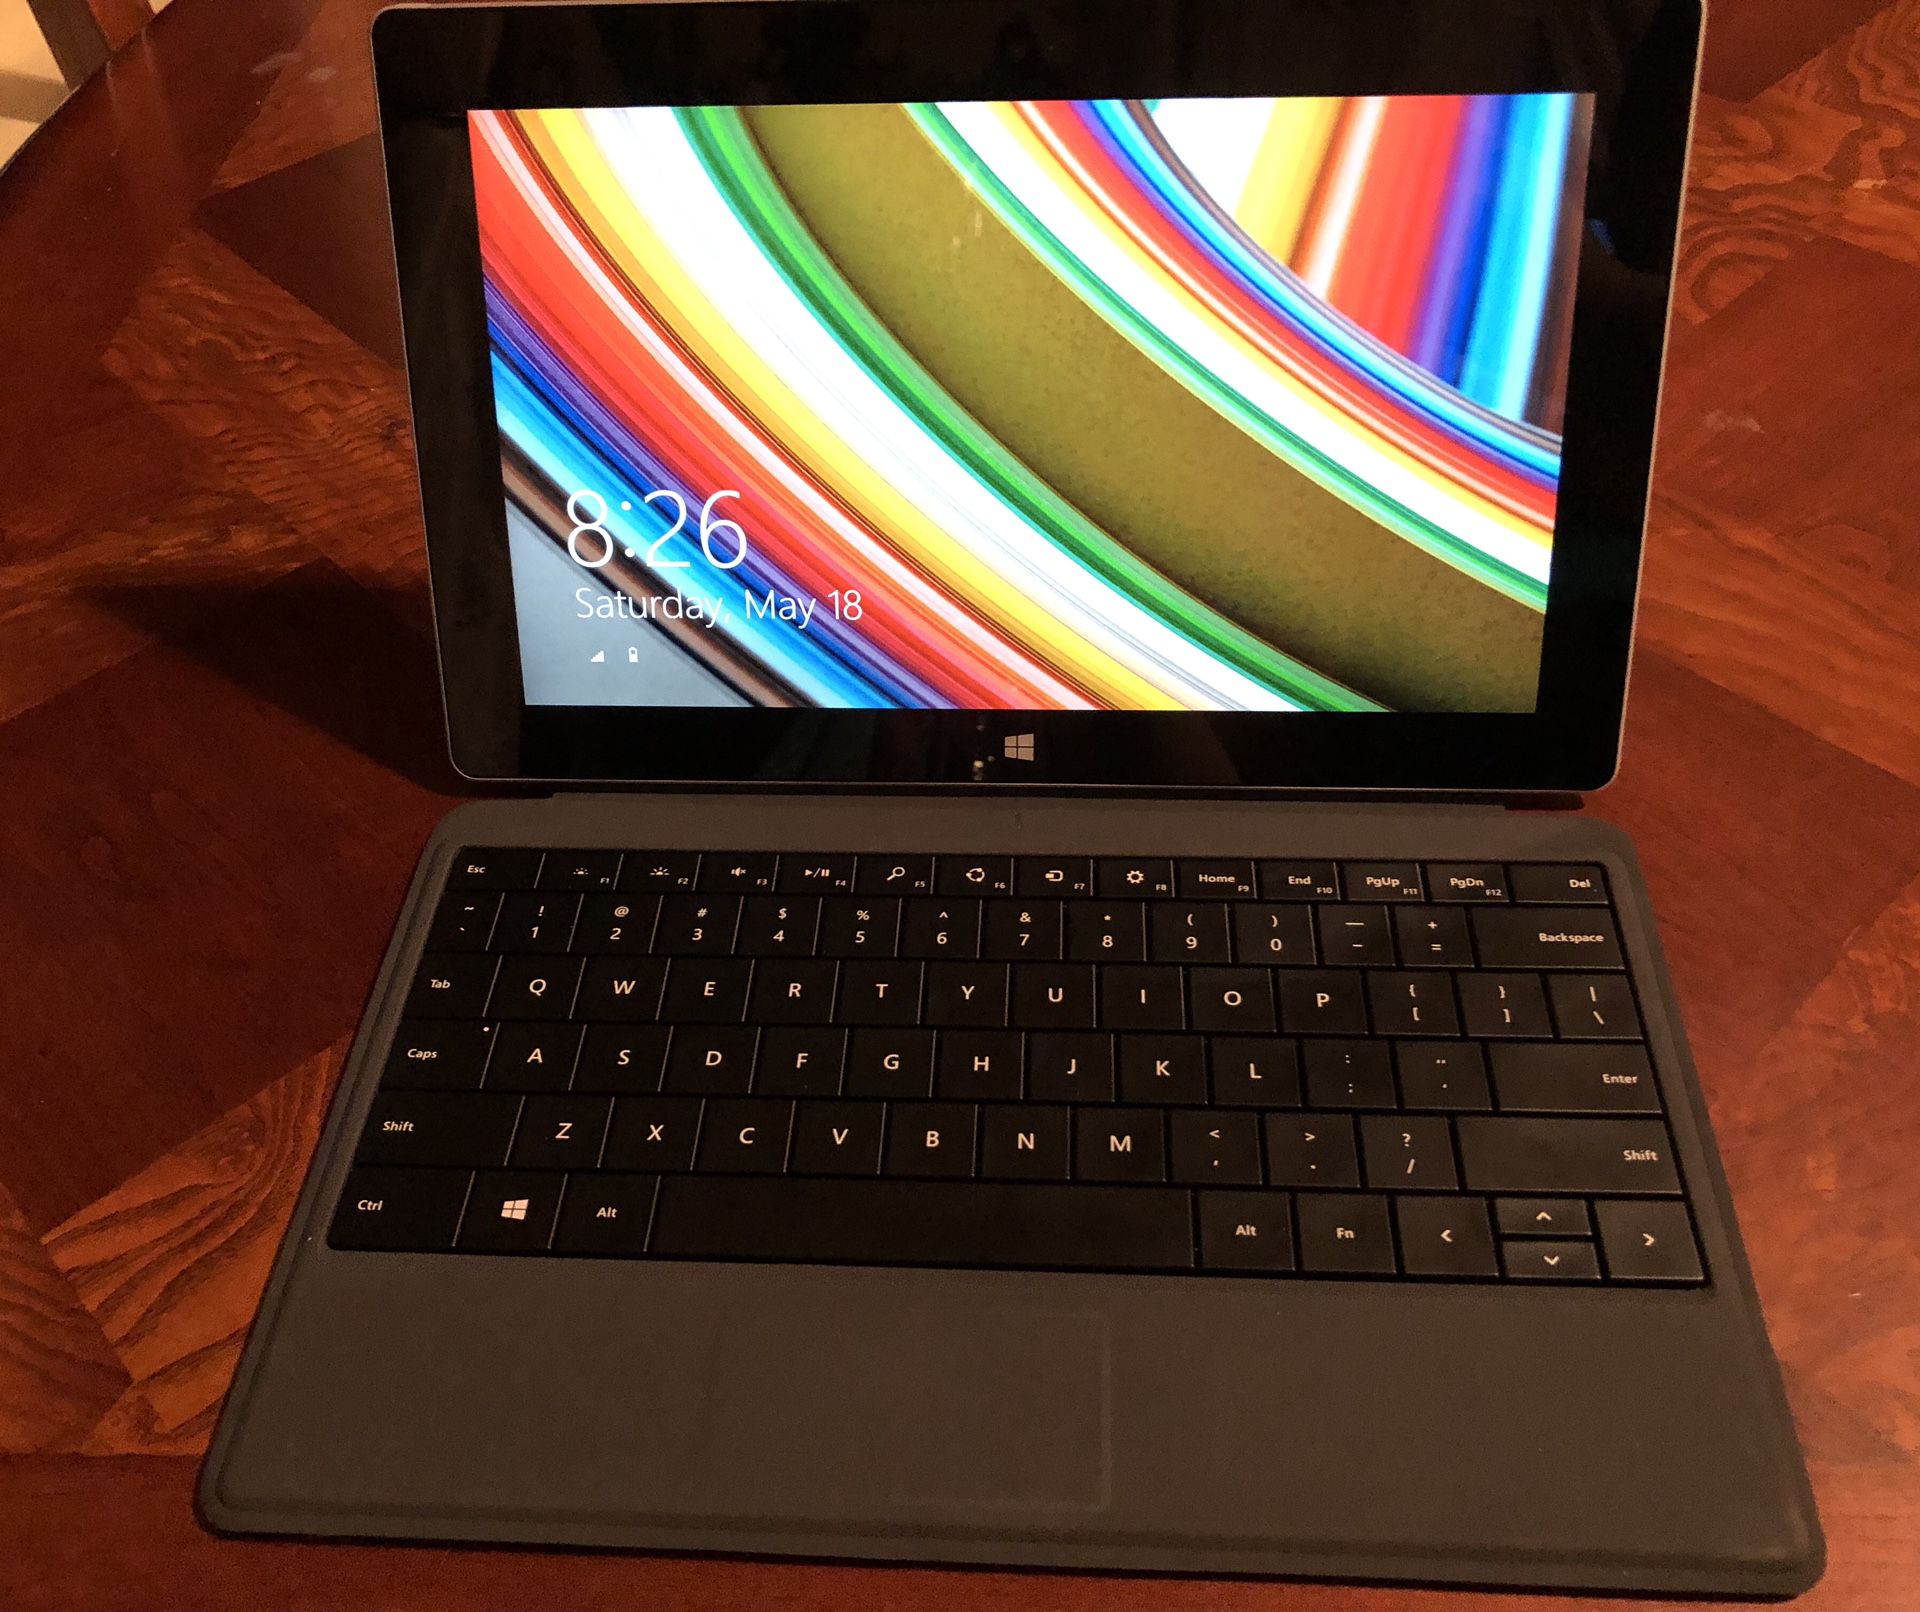 Microsoft Surface RT tablet w/keyboard